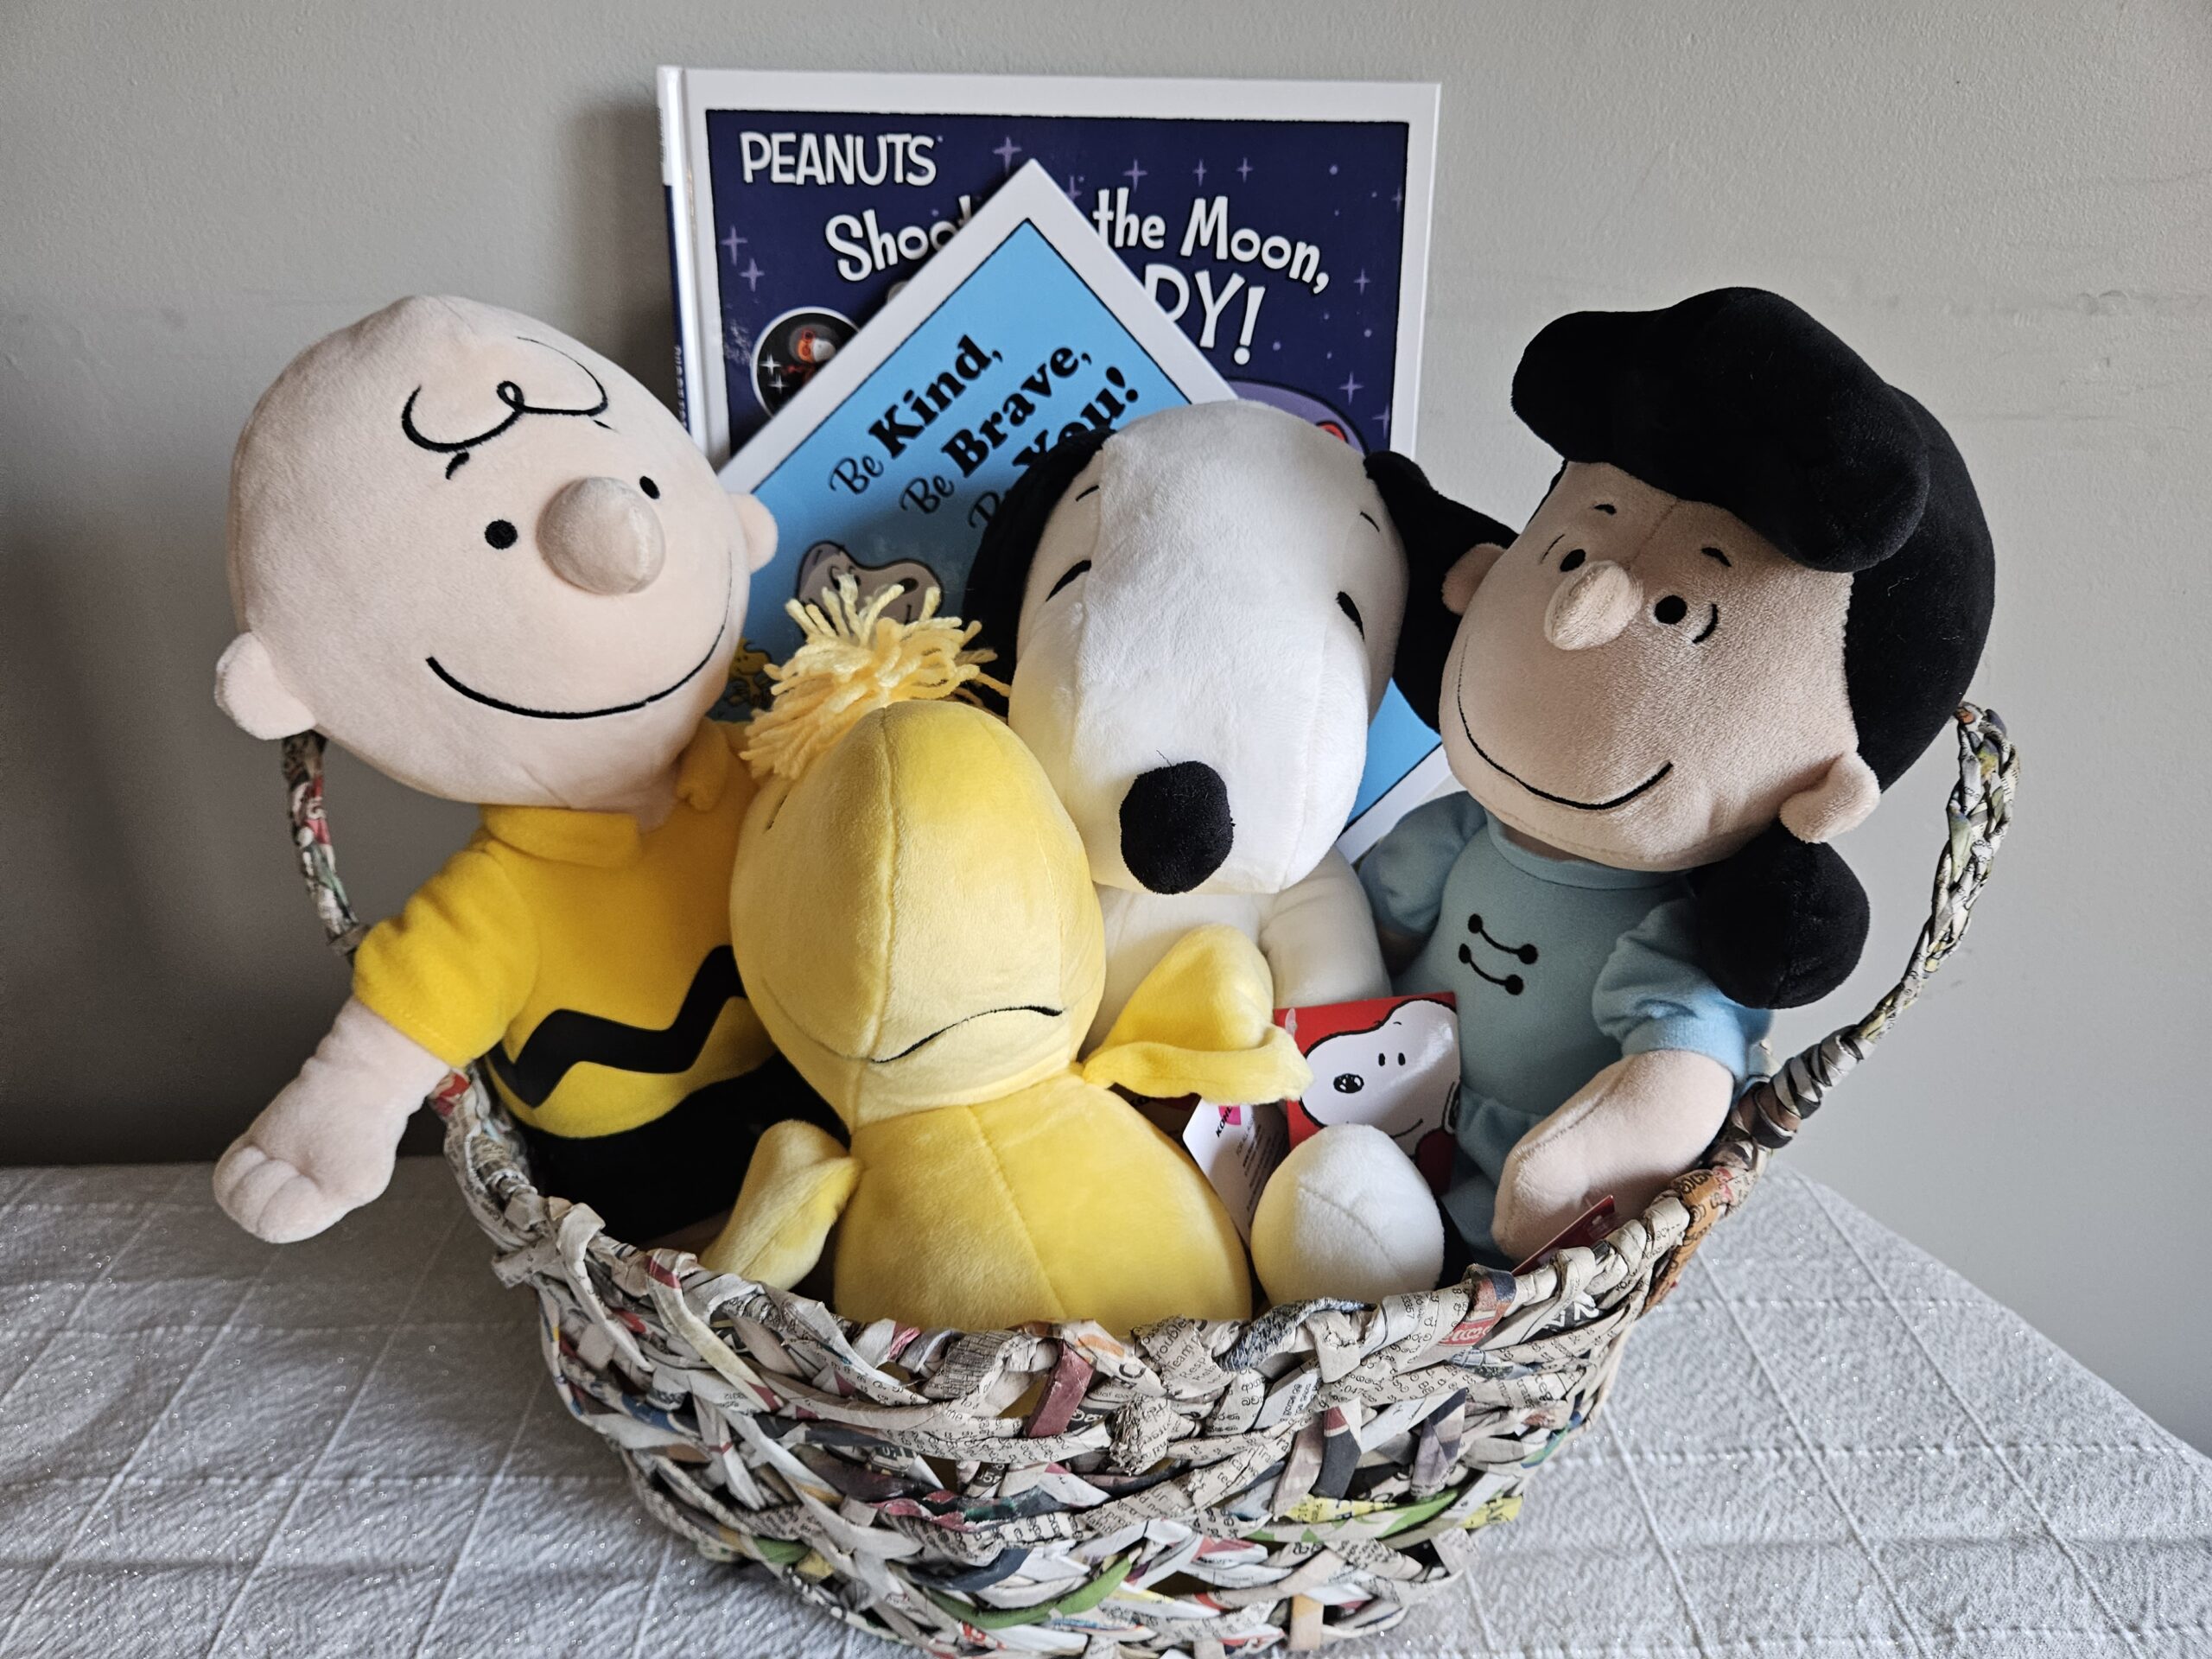 Item HG24 - Cute Basket of Peanuts Fun for Your Kids or Grandkids